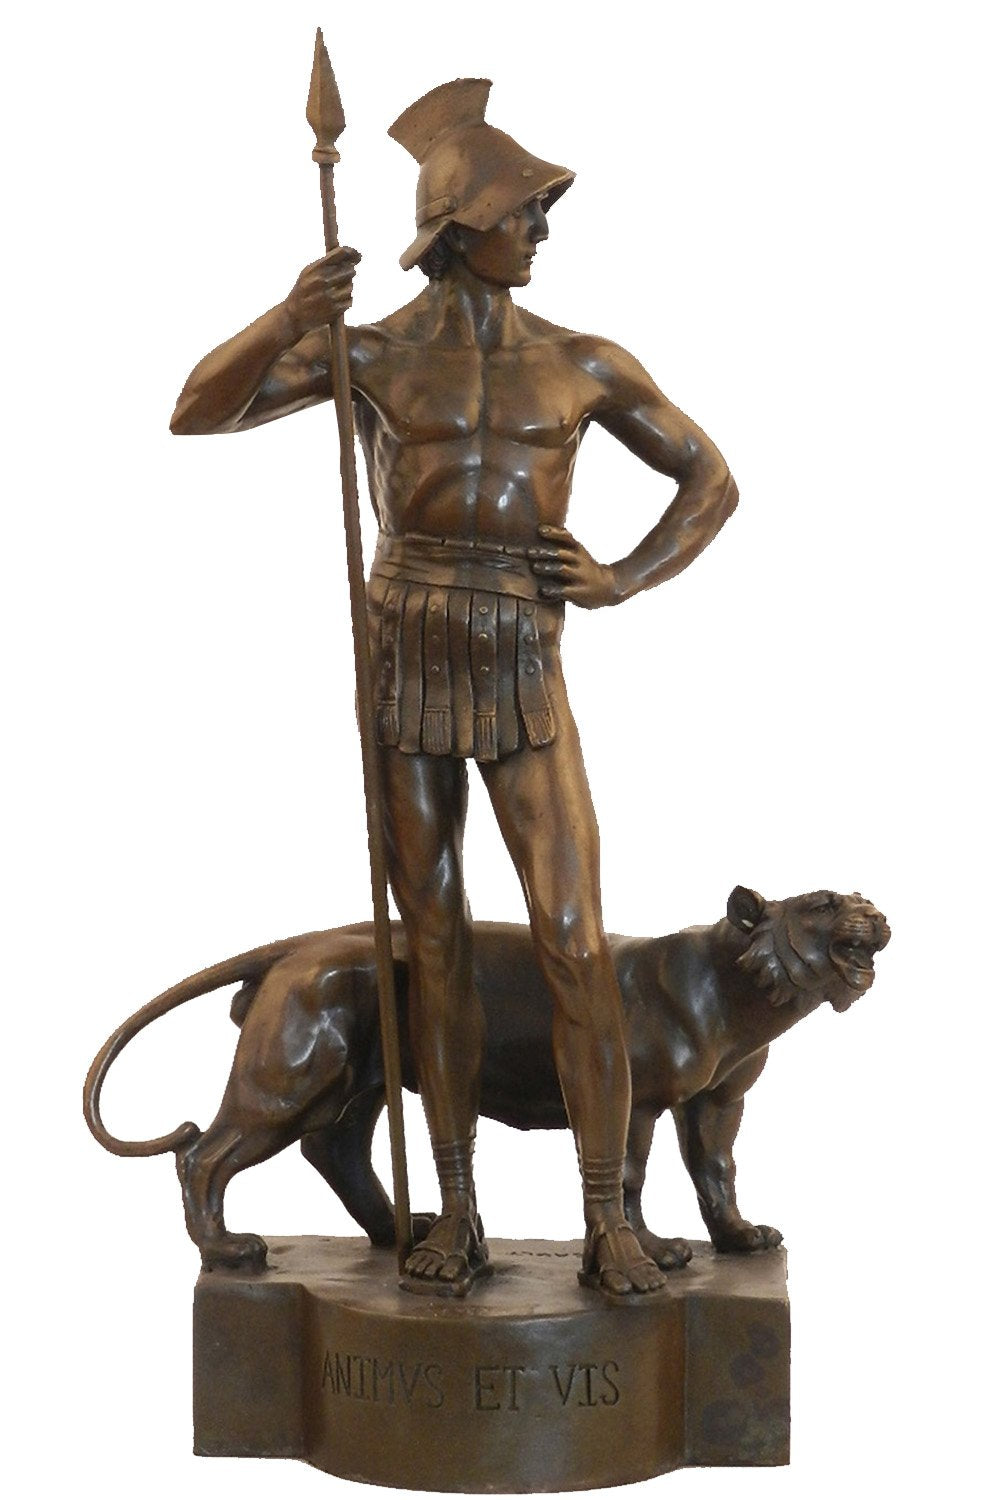 TPY-698 bronze sculpture